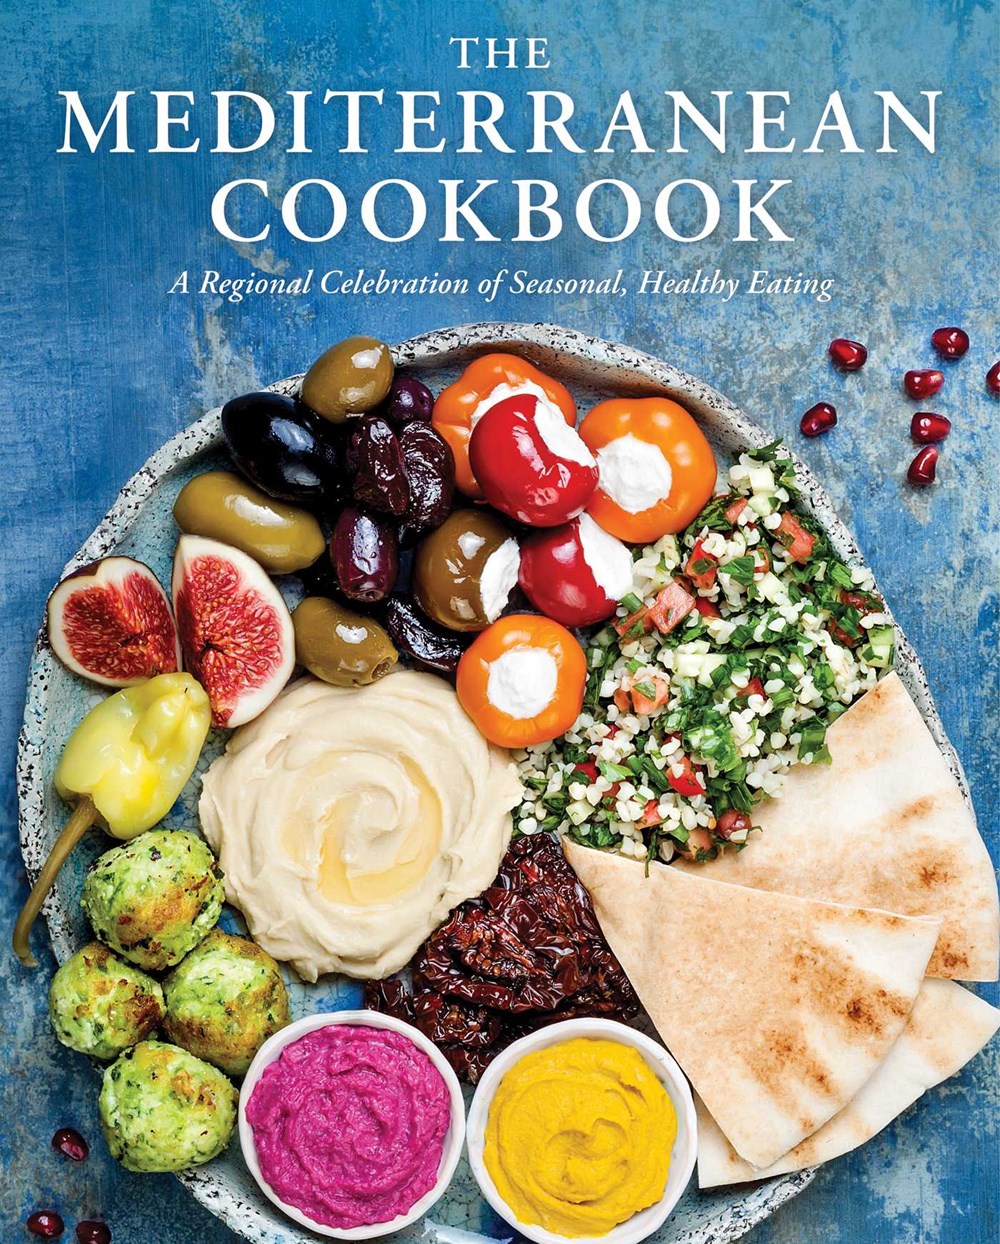 The Mediterranean Cookbook